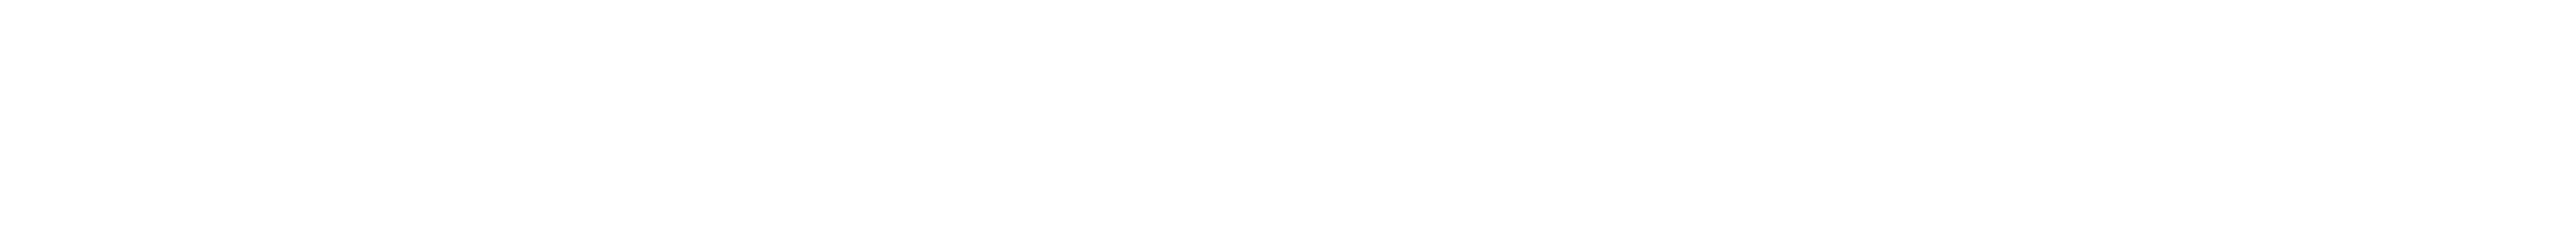 2022-detechtion-logo-white